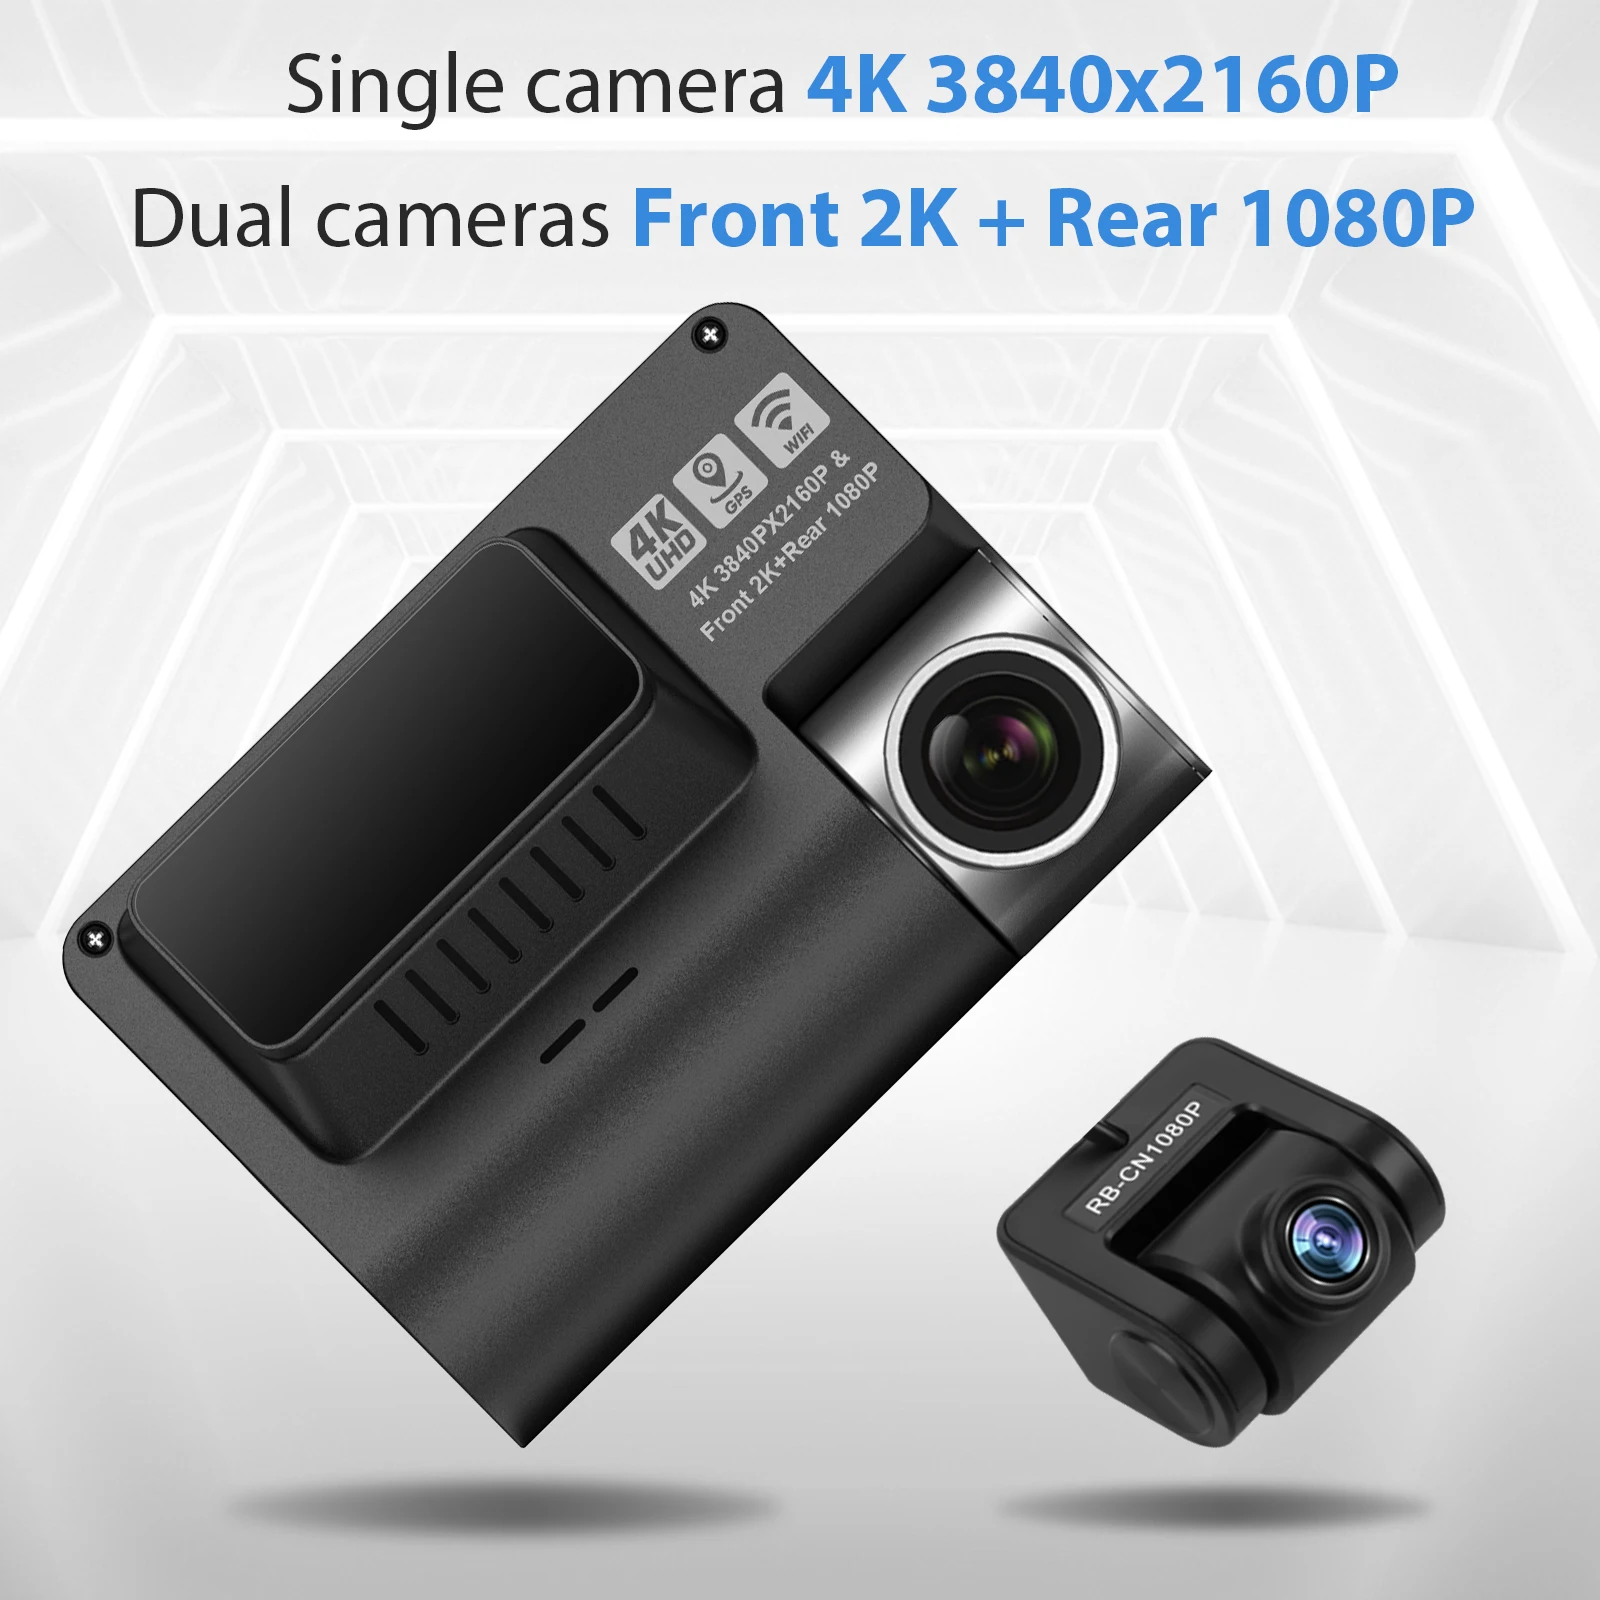 Dual Dash Camera